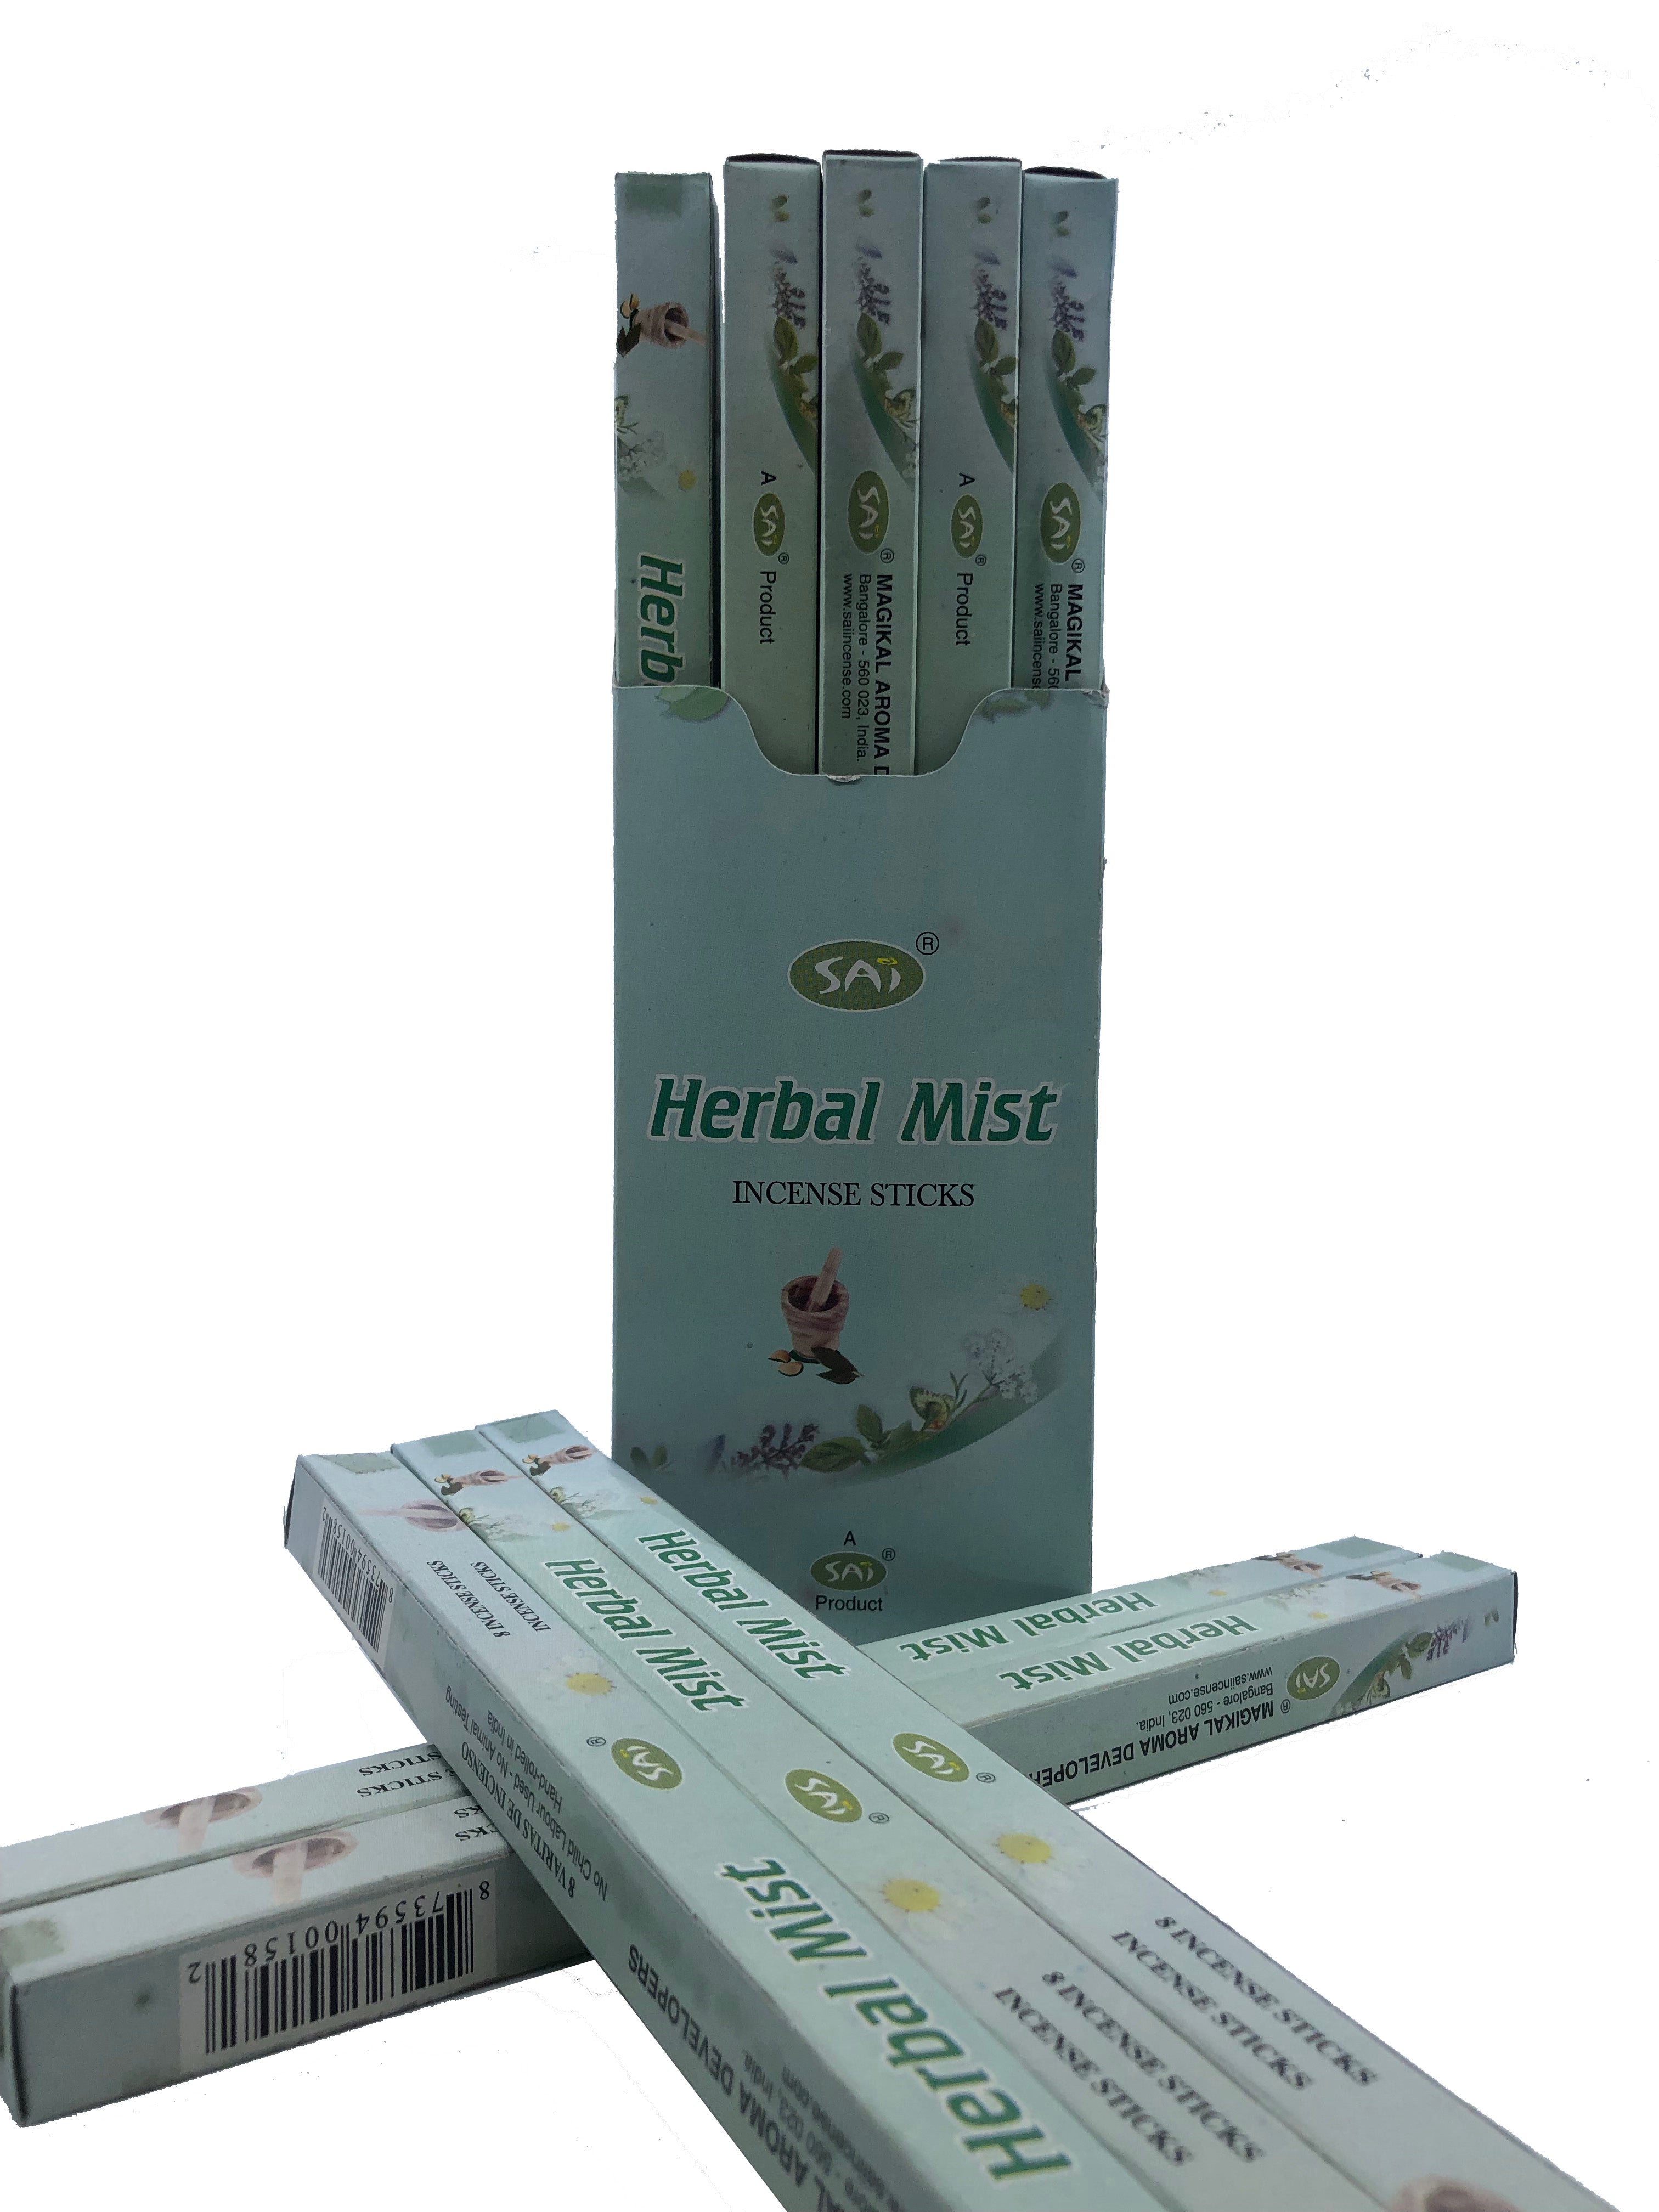 Sai Herbal Mist Incense Sticks PPPI 